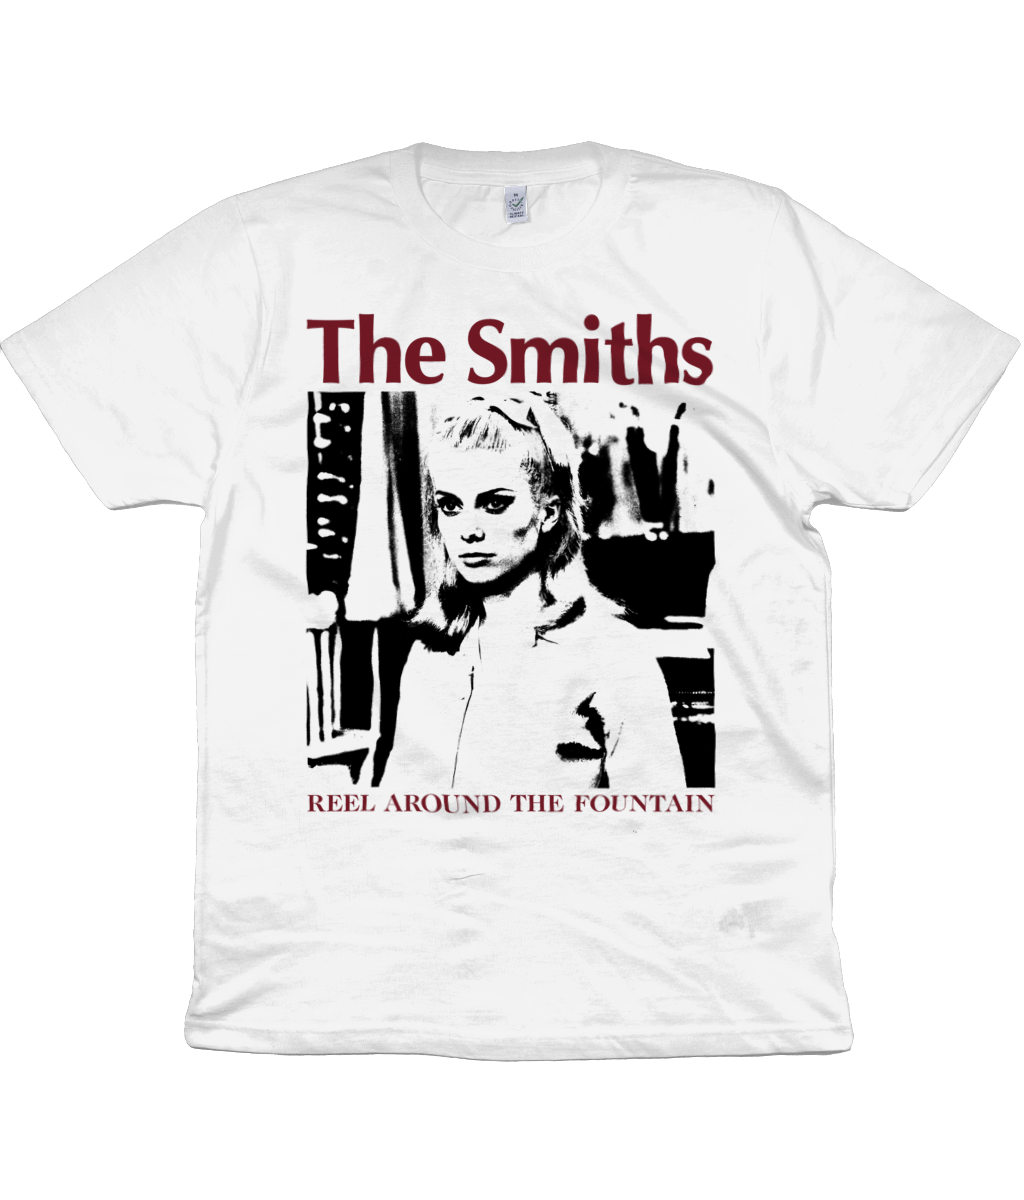 The Smiths - REEL AROUND THE FOUNTAIN - 1983 - Catherine Deneuve - Version 2